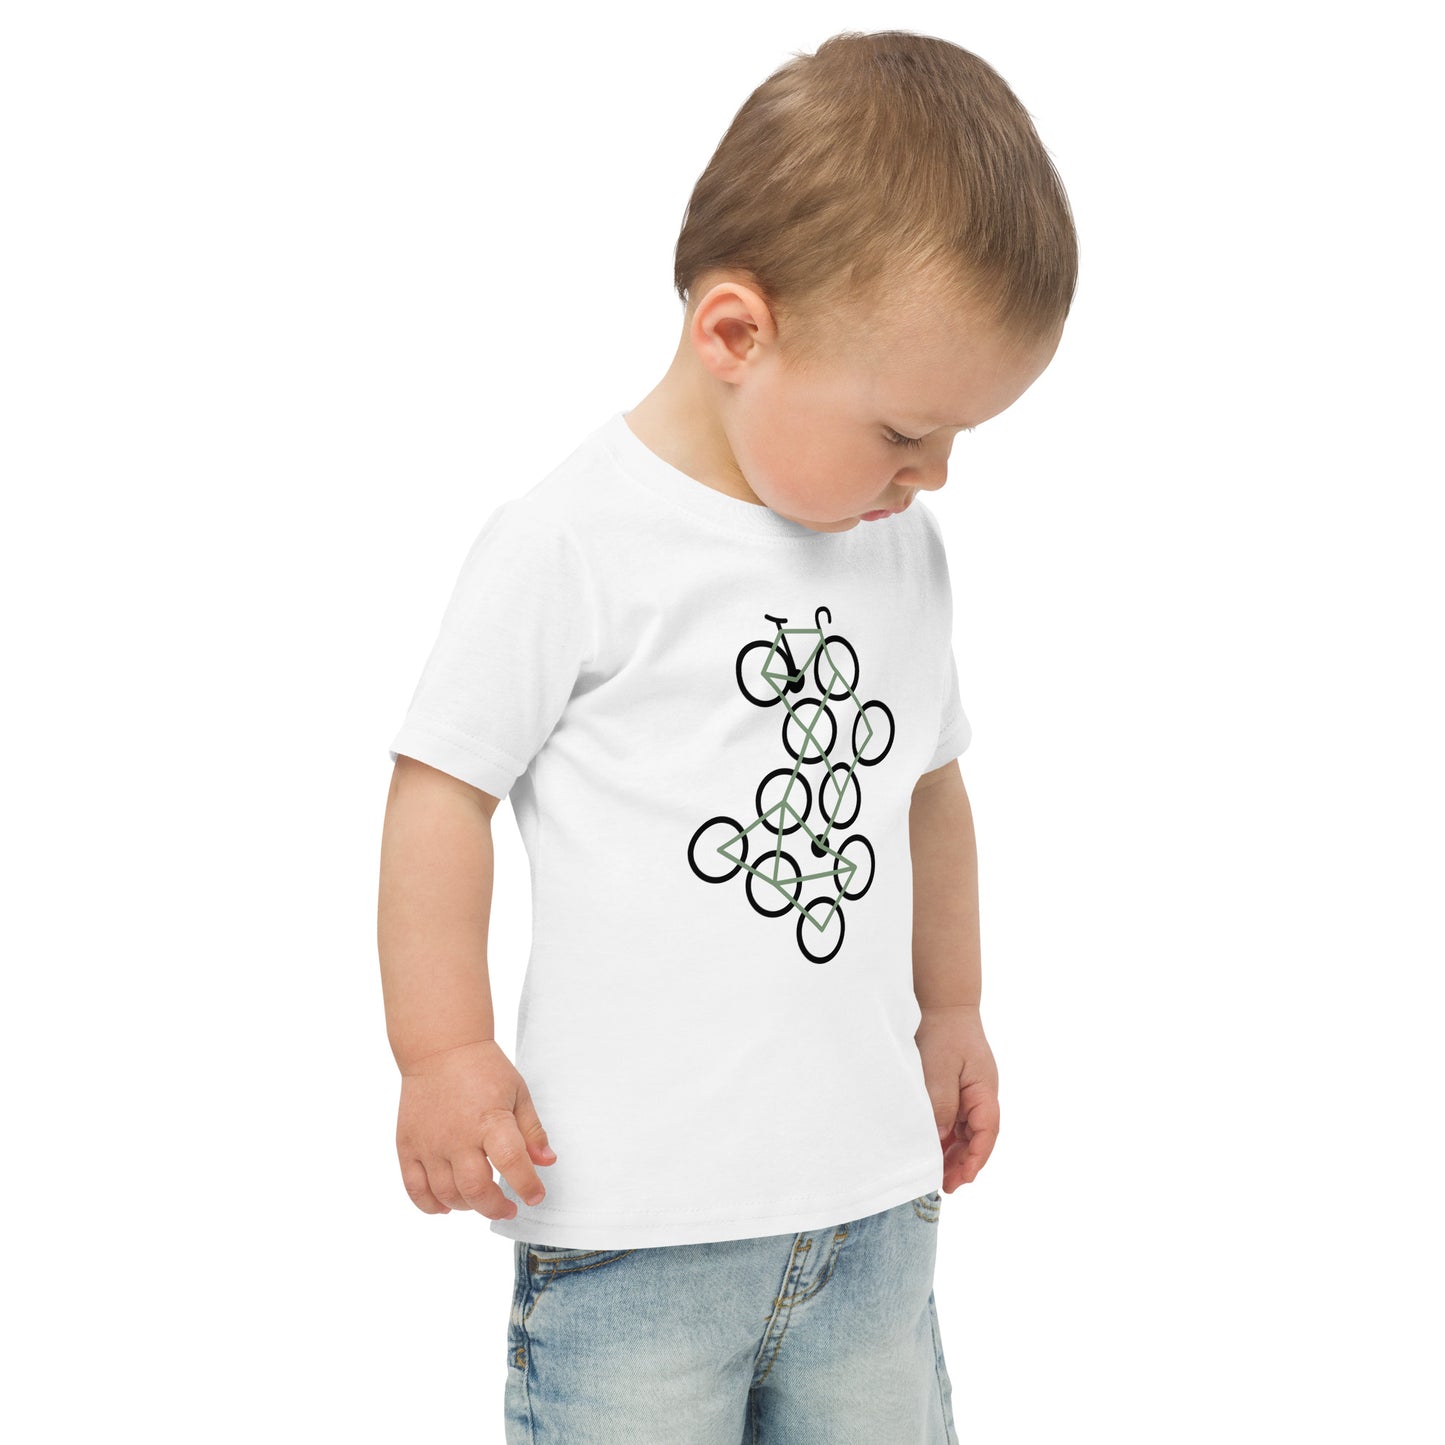 Bike Graphic Toddler Jersey T Shirt